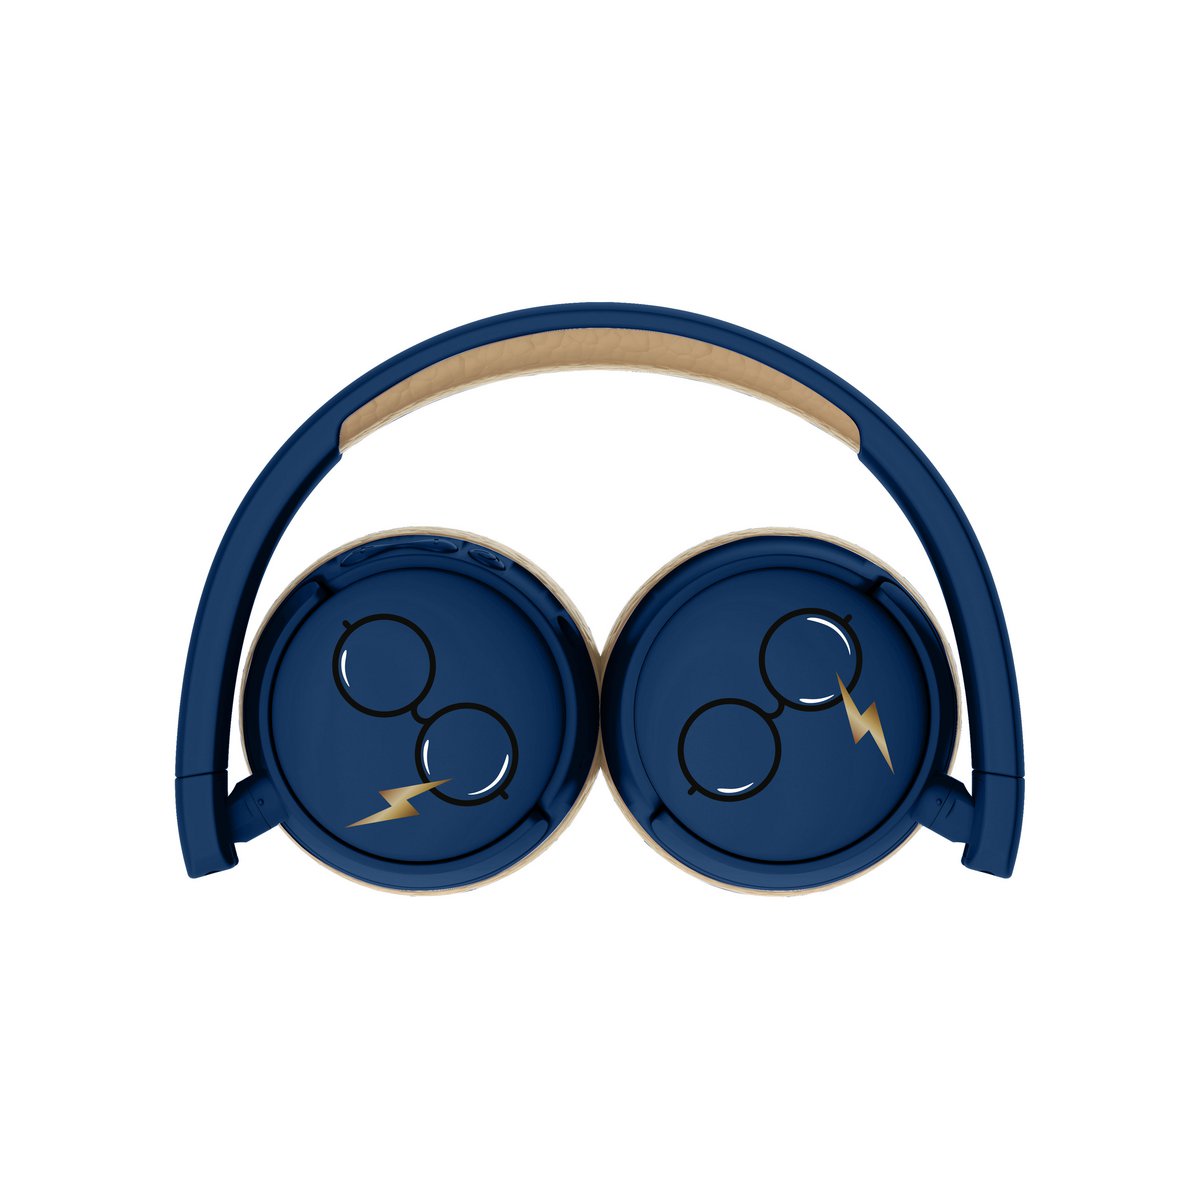 Harry Potter - Junior Bluetooth-hoofdtelefoon (blauw)